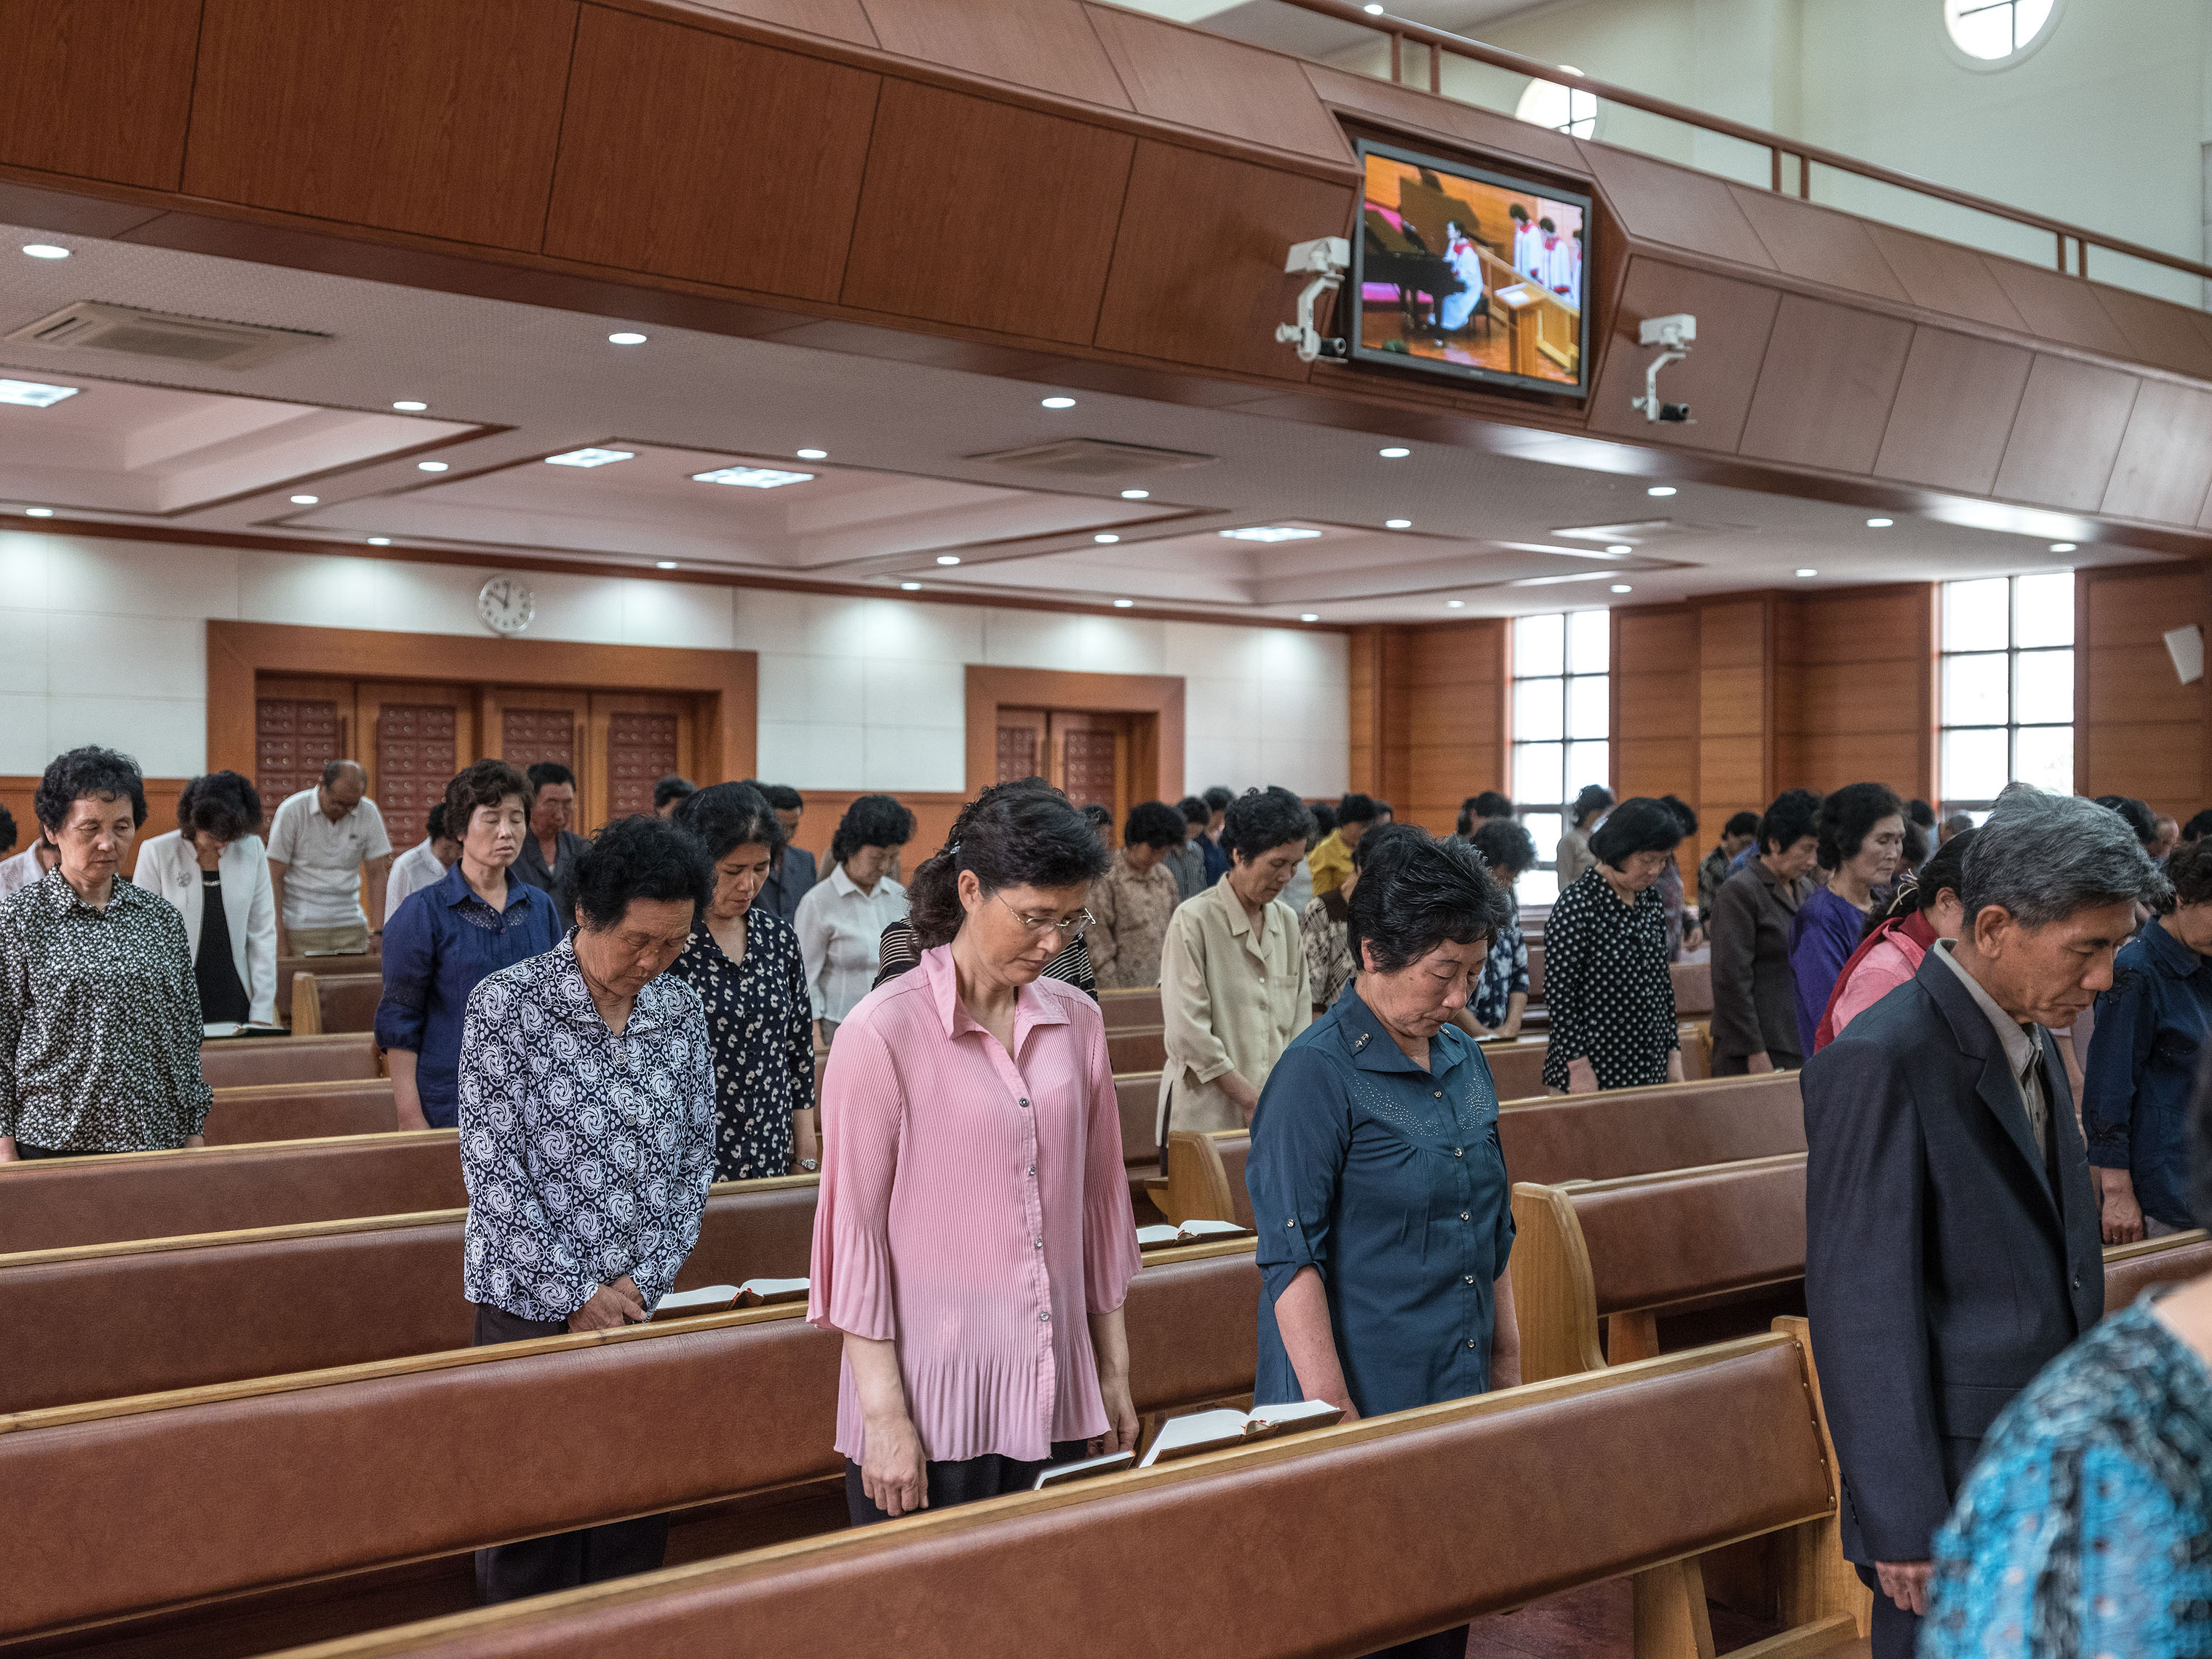 Worshipers pray at Bongsu Church in Pyongyang. (Carl De Keyzer—Magnum Photos)